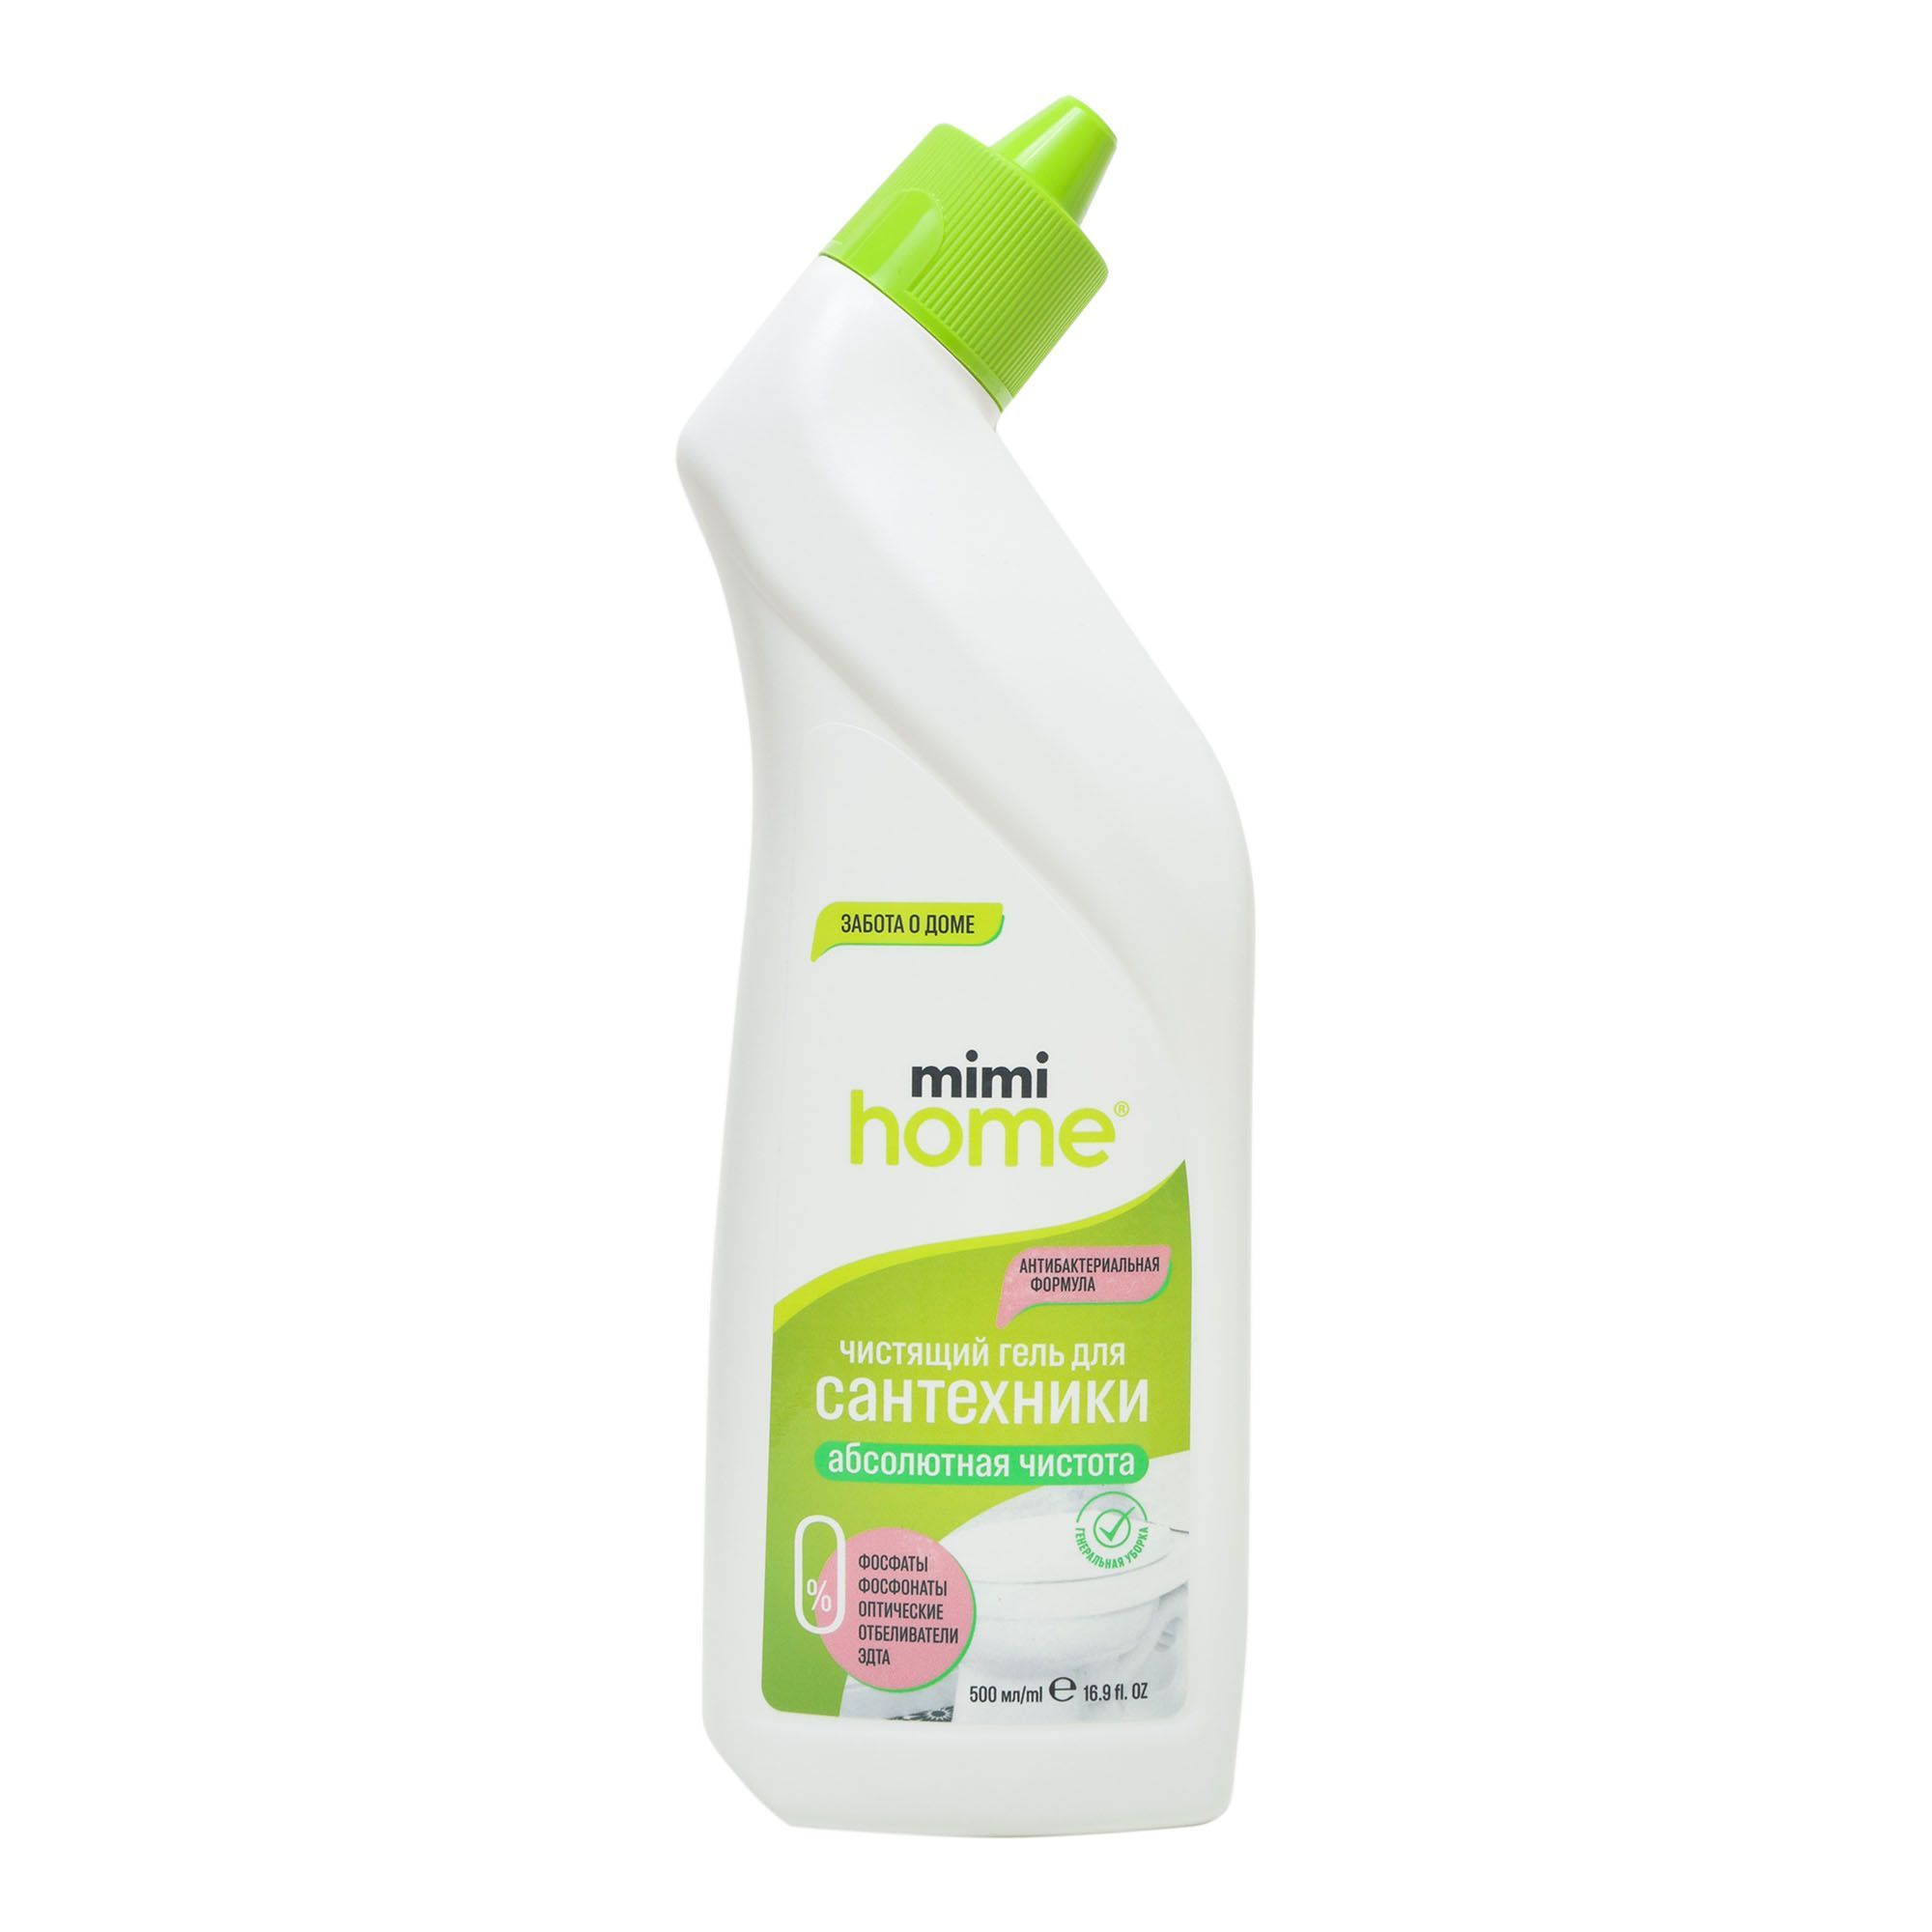 Mimi Home Средство чистящее для сантехники Абсолютная чистота гель, 500мл